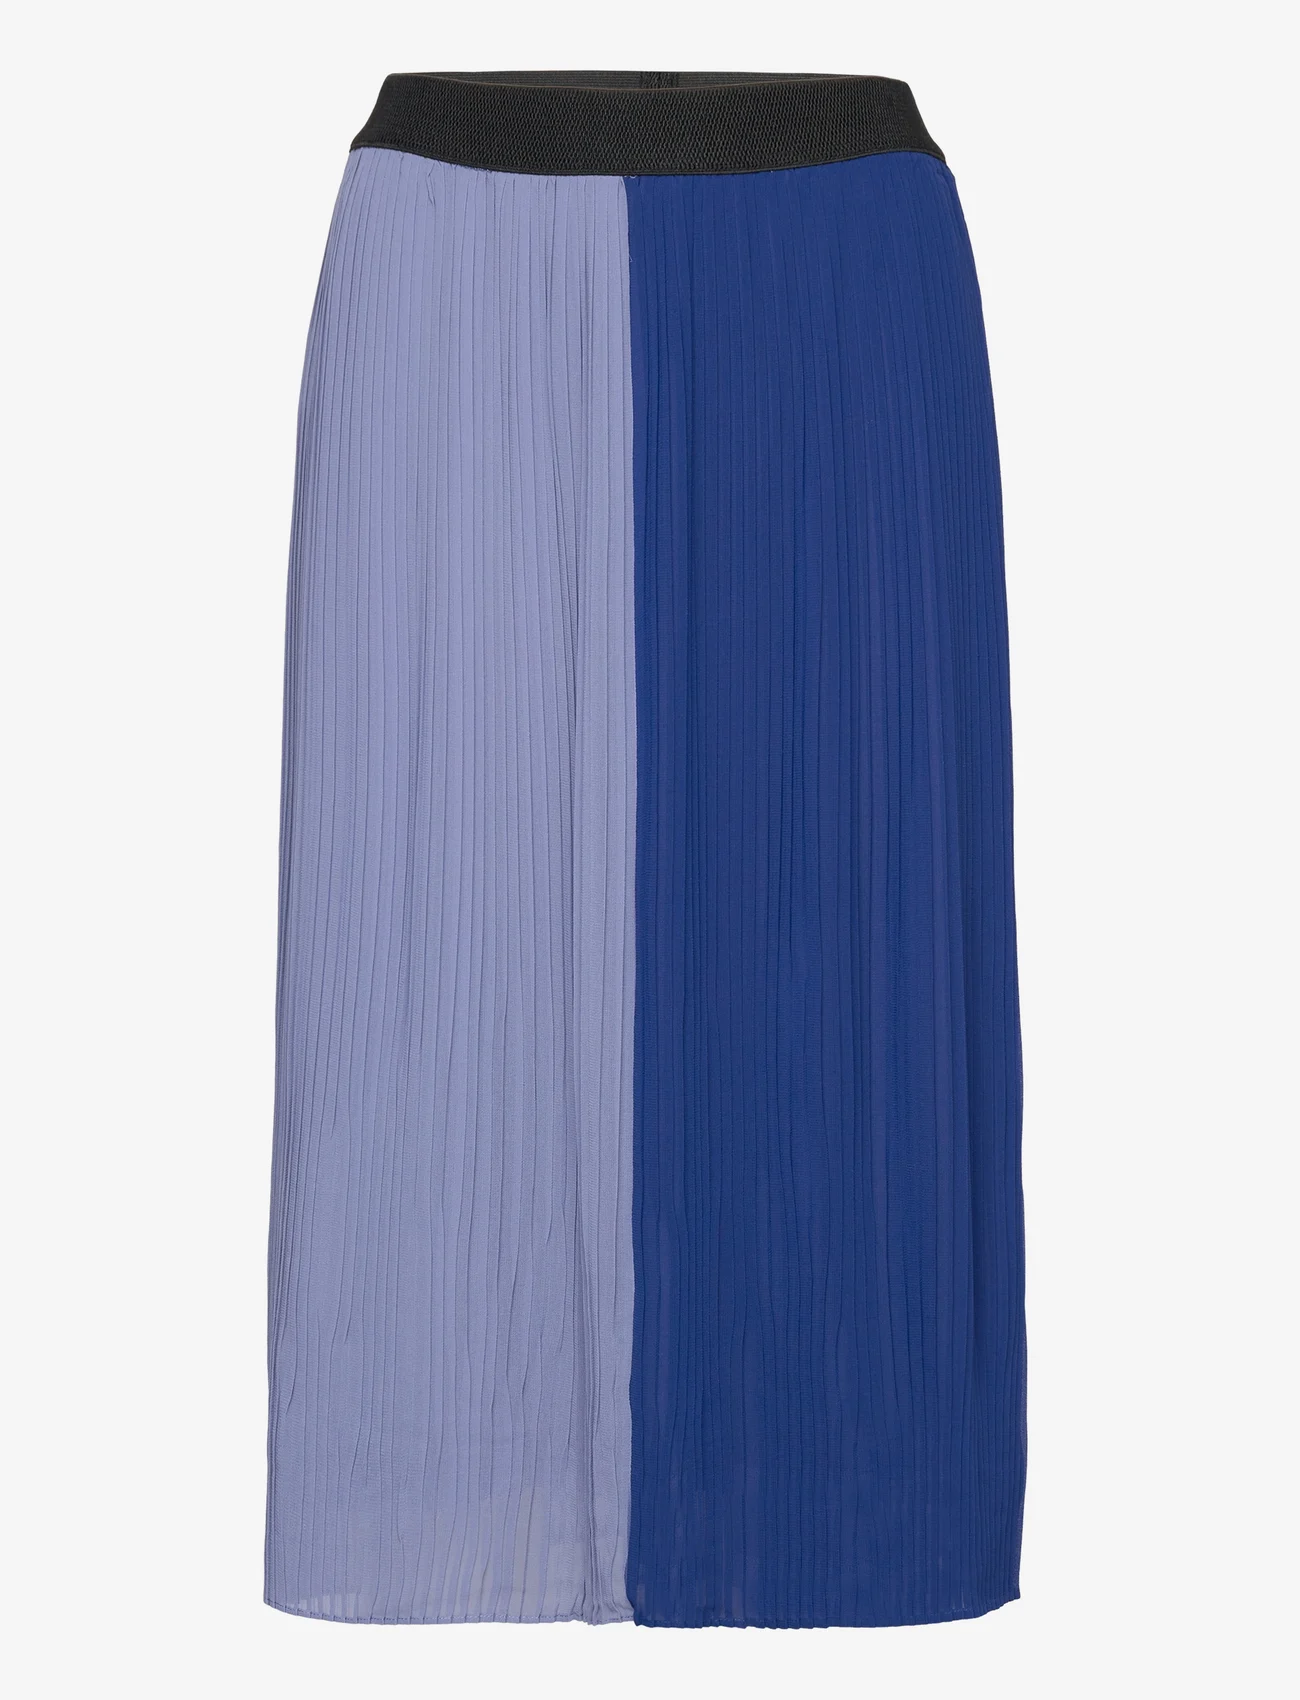 Saint Tropez - AyaSZ Skirt - pleated skirts - colony blue - 0